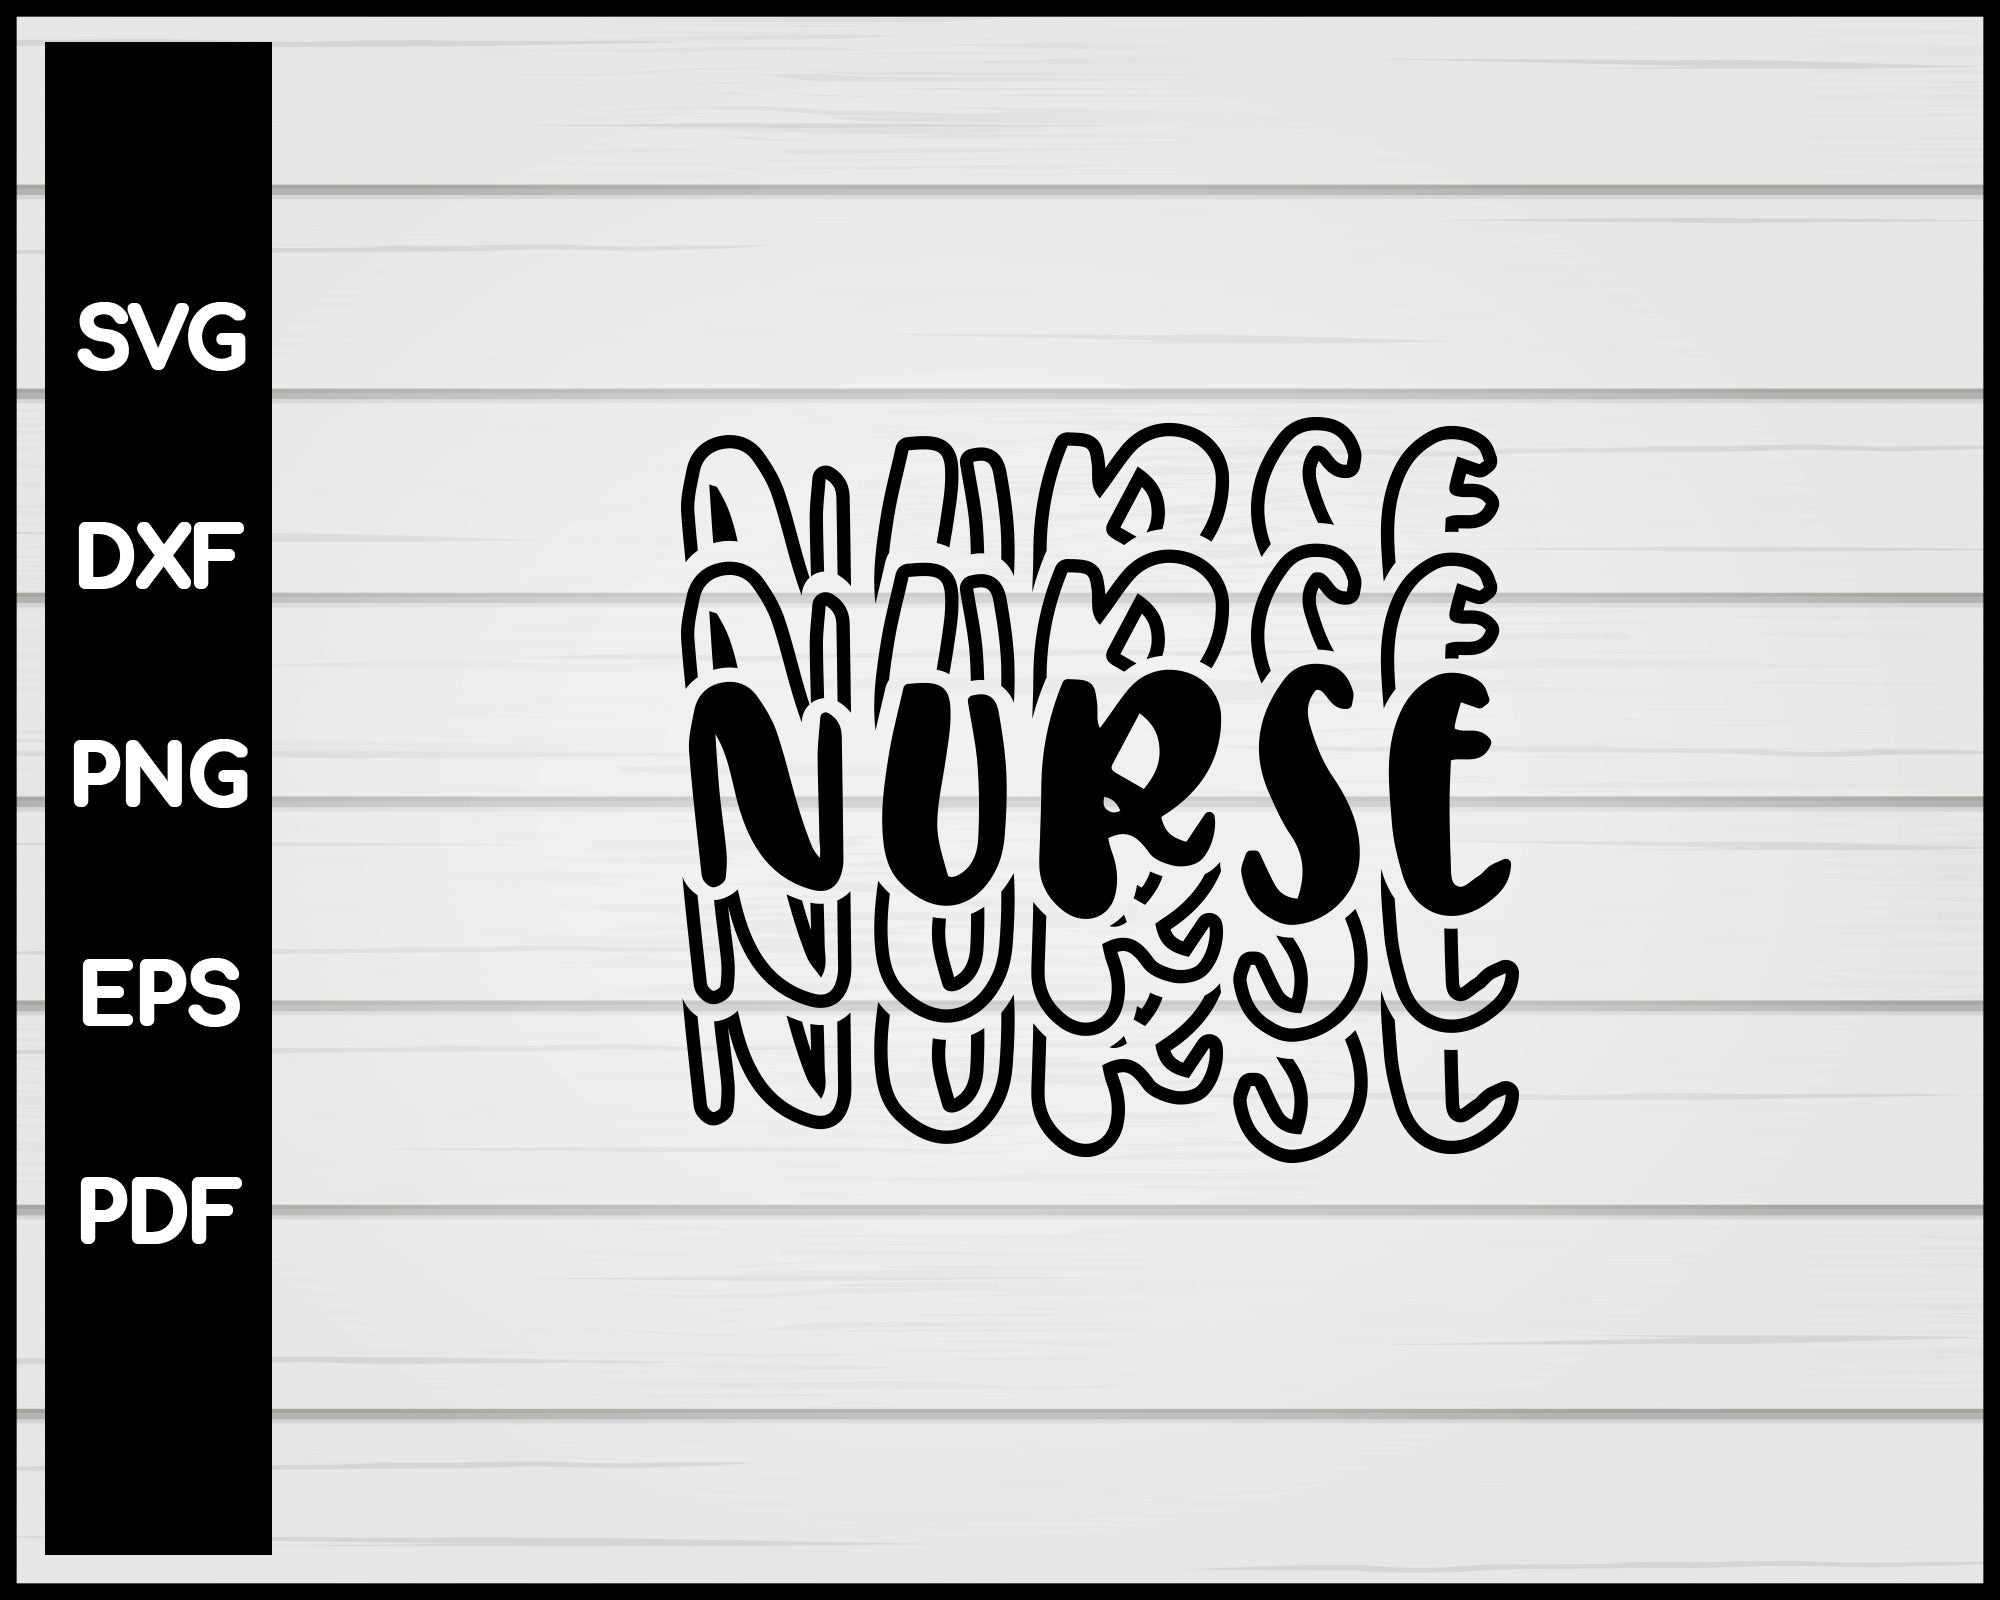 nurse svg printable files – Creativedesignmaker